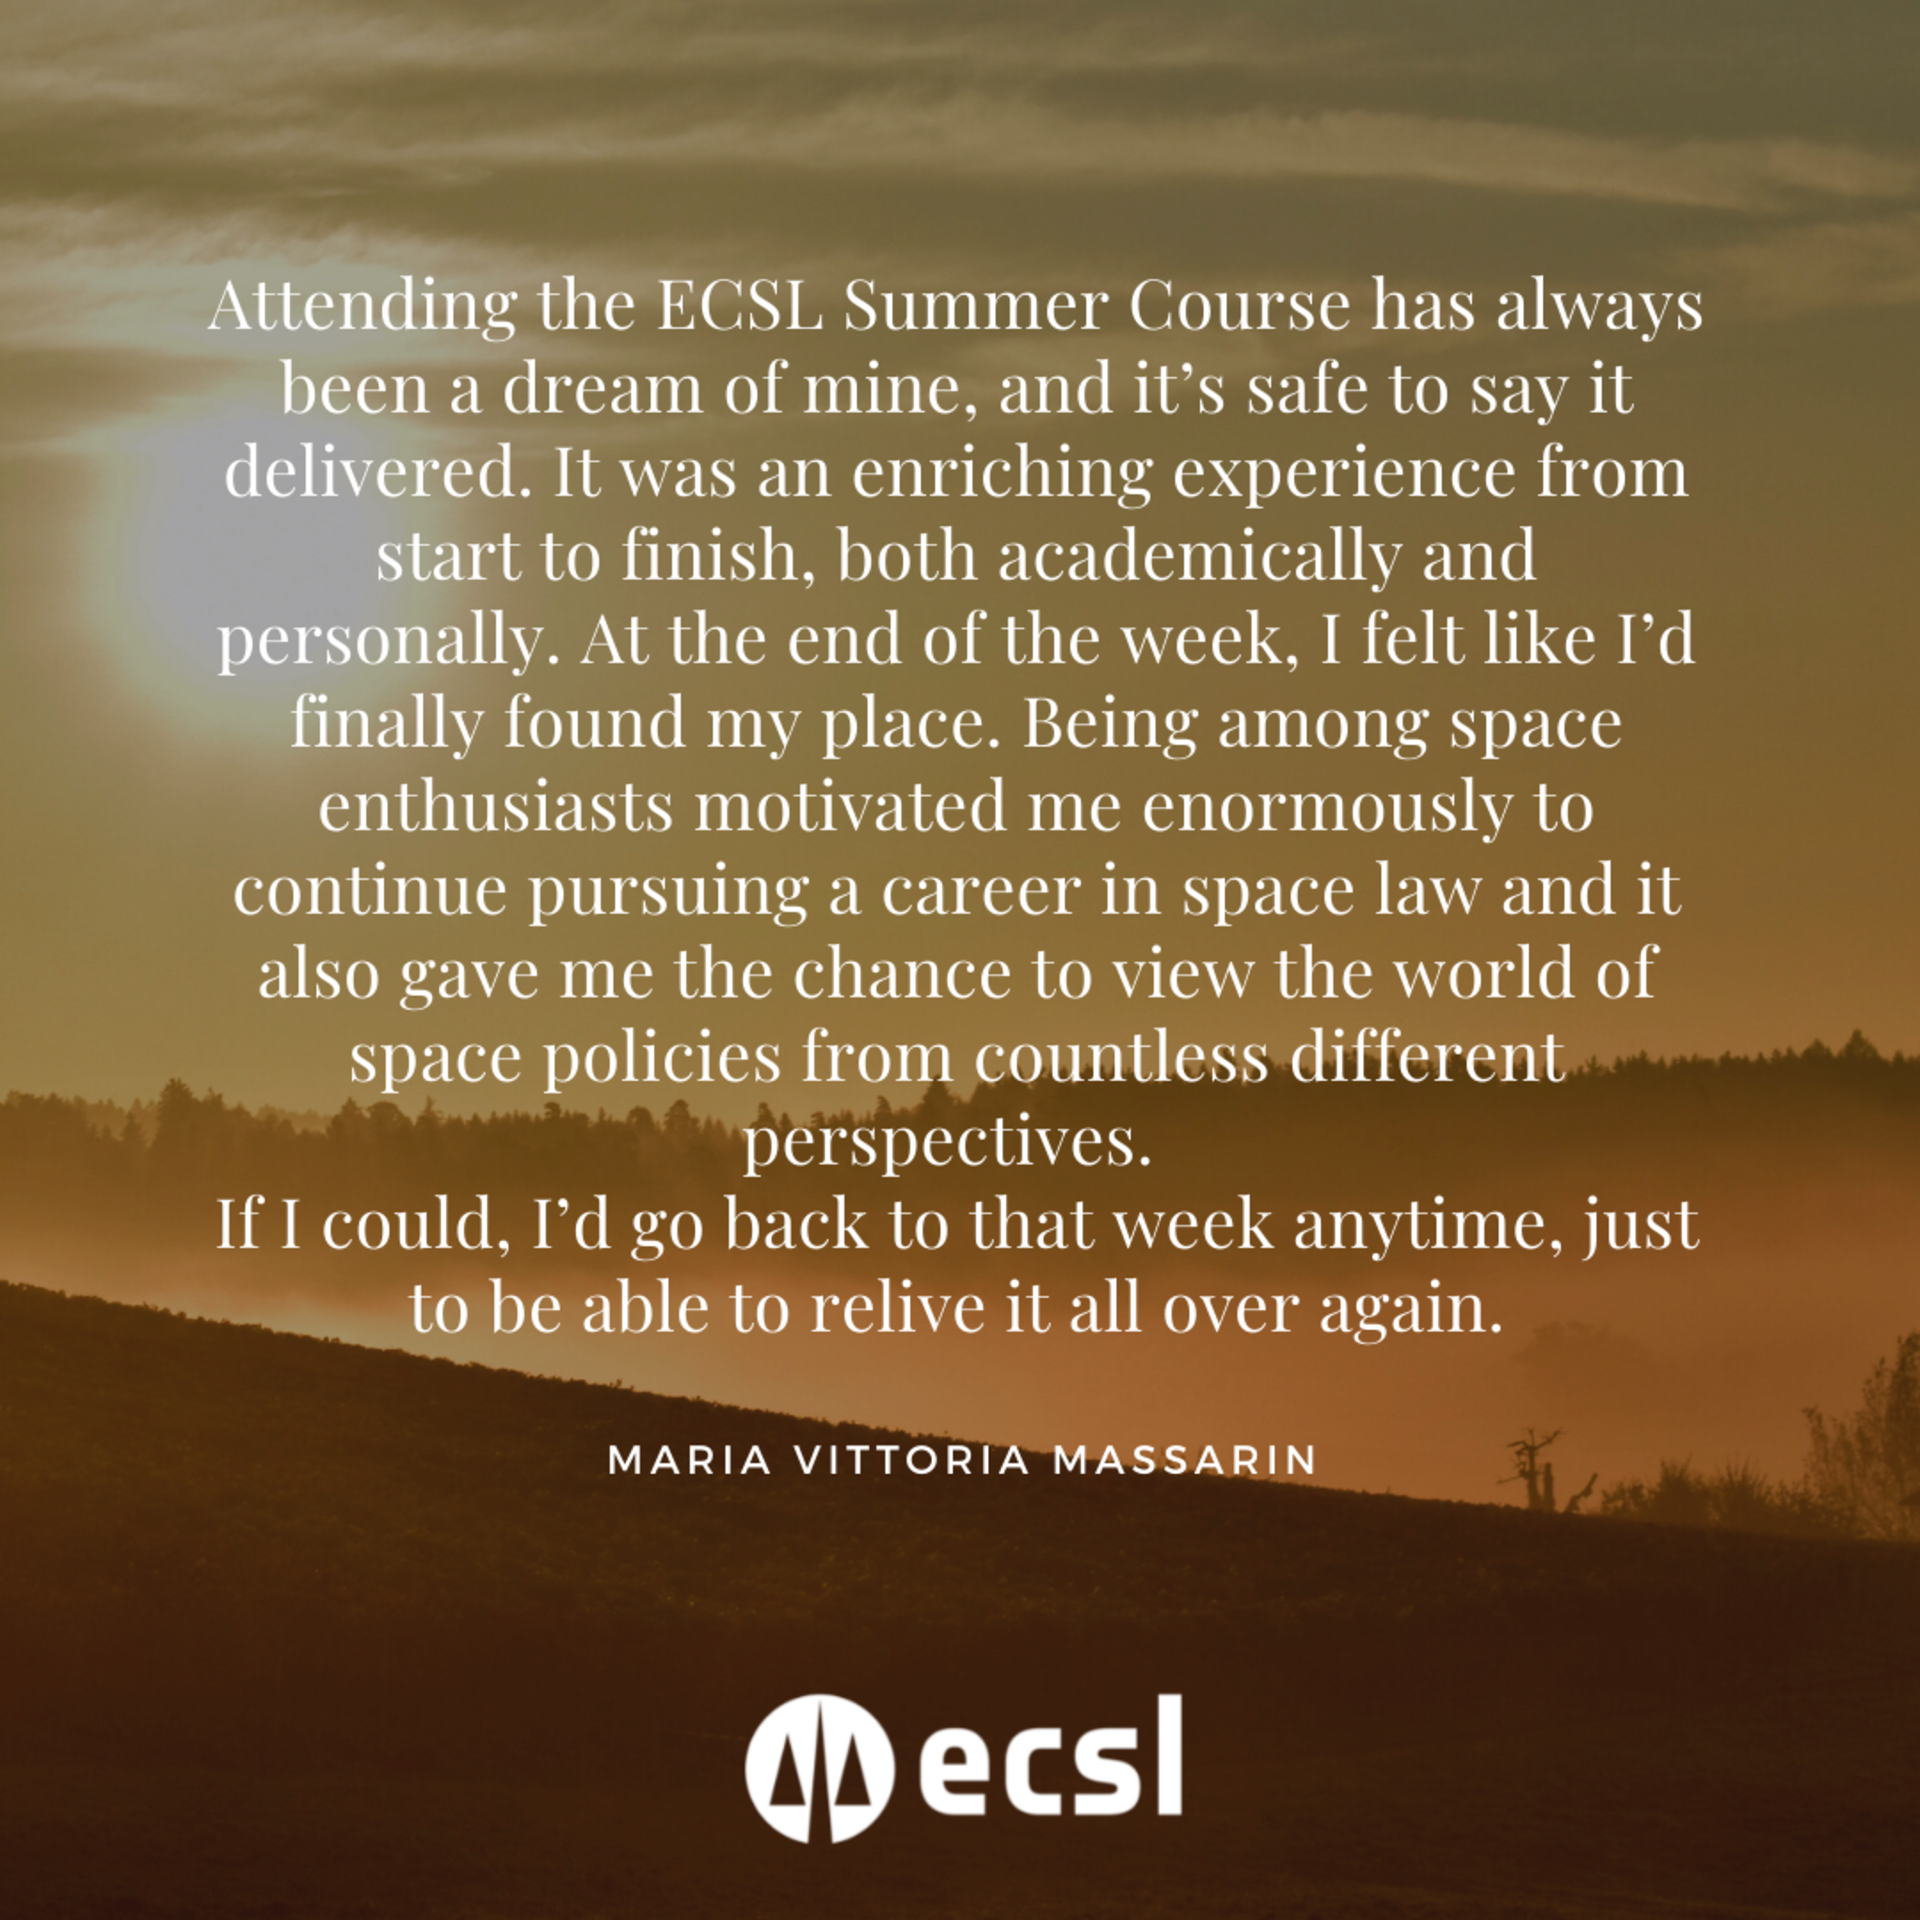 ECSL Summer Course Statement - Maria Vittoria Massarin